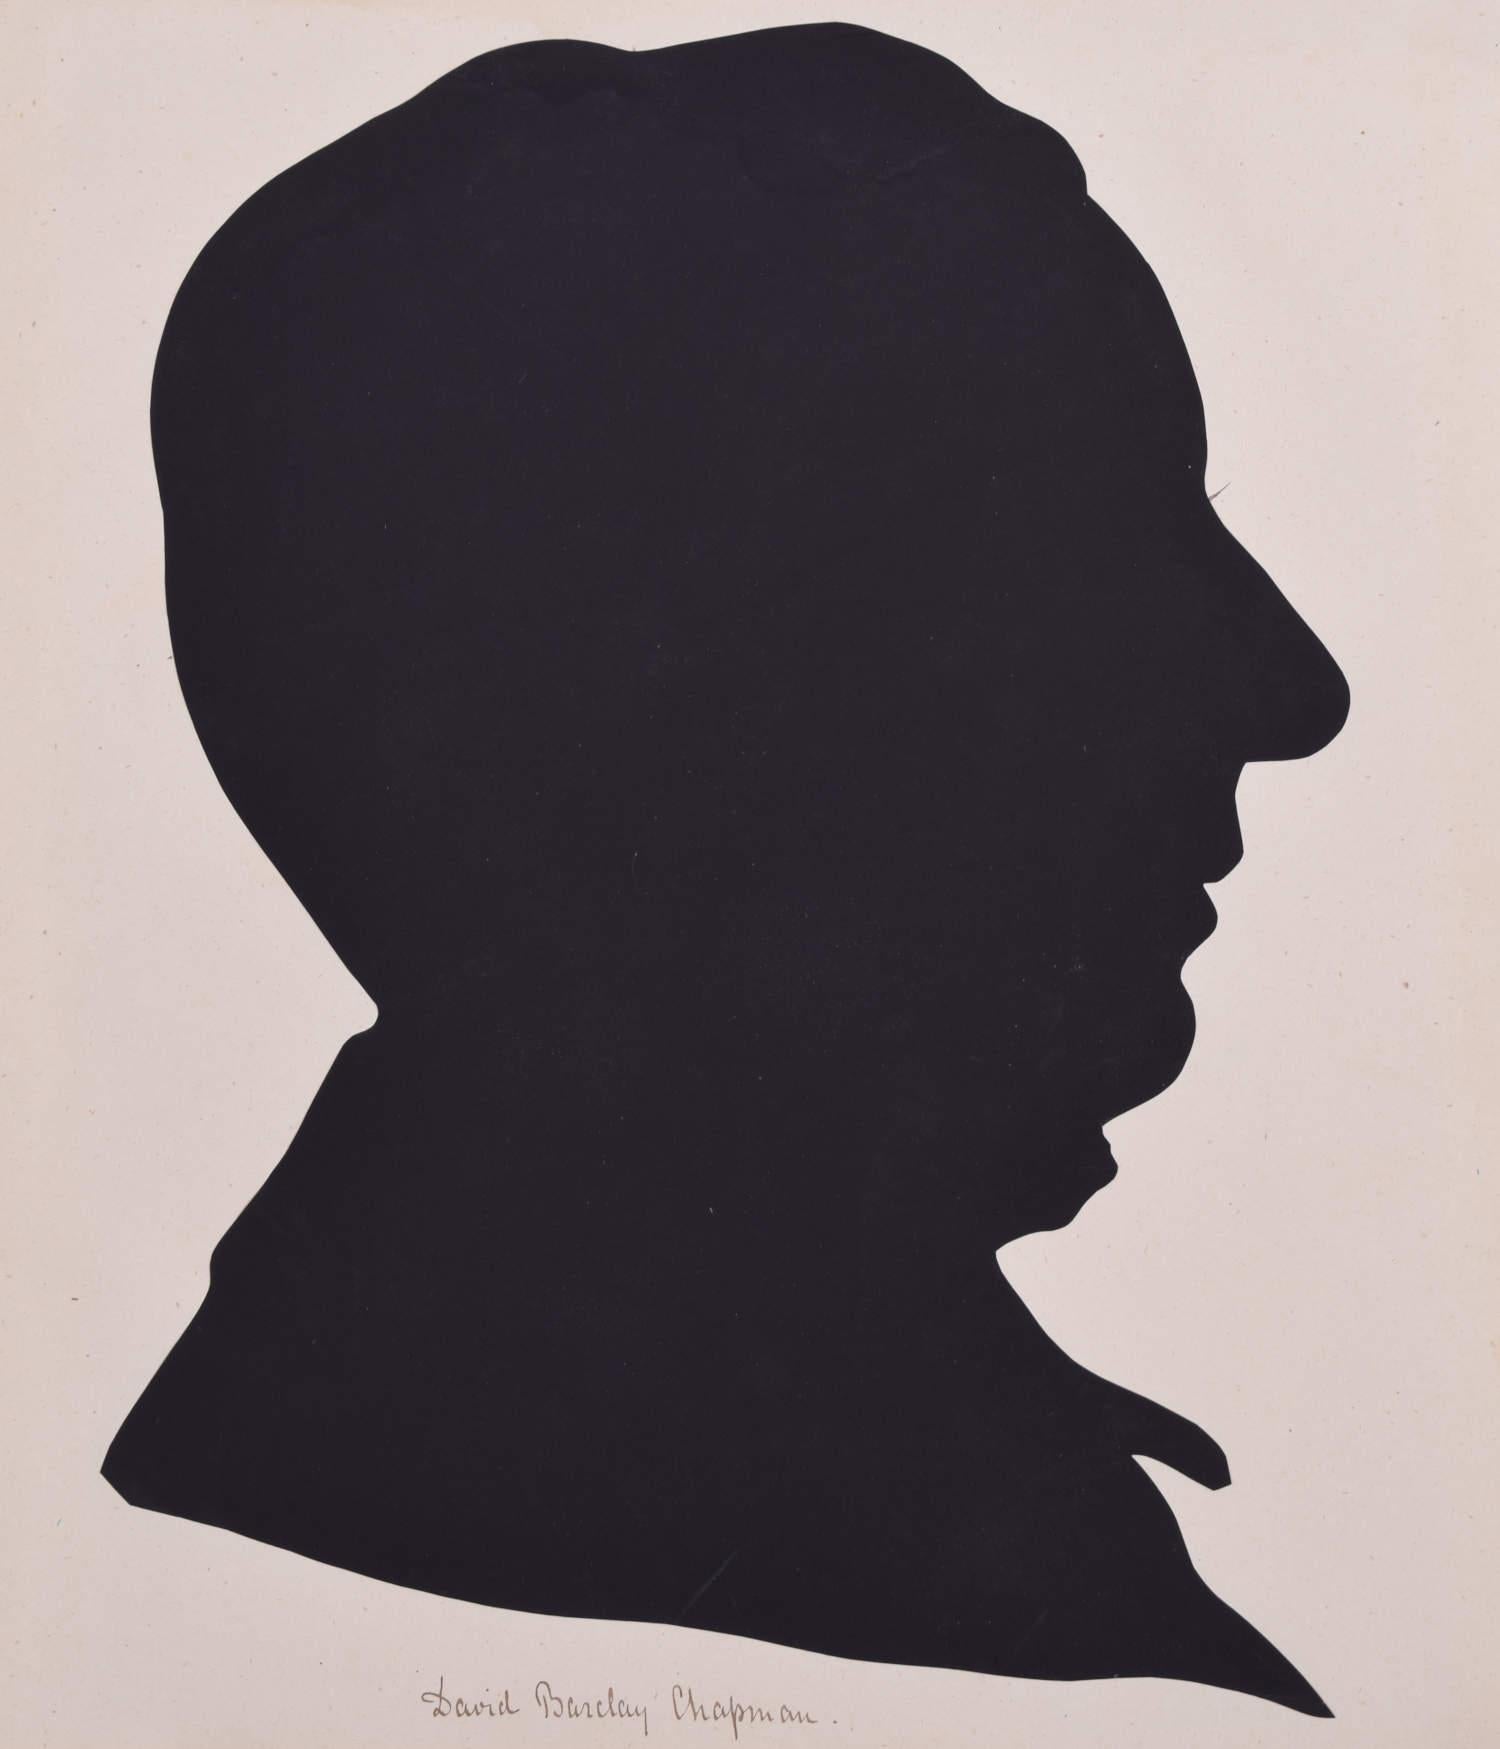 Nineteenth century silhouette of a gentleman: David Barclay Chapman